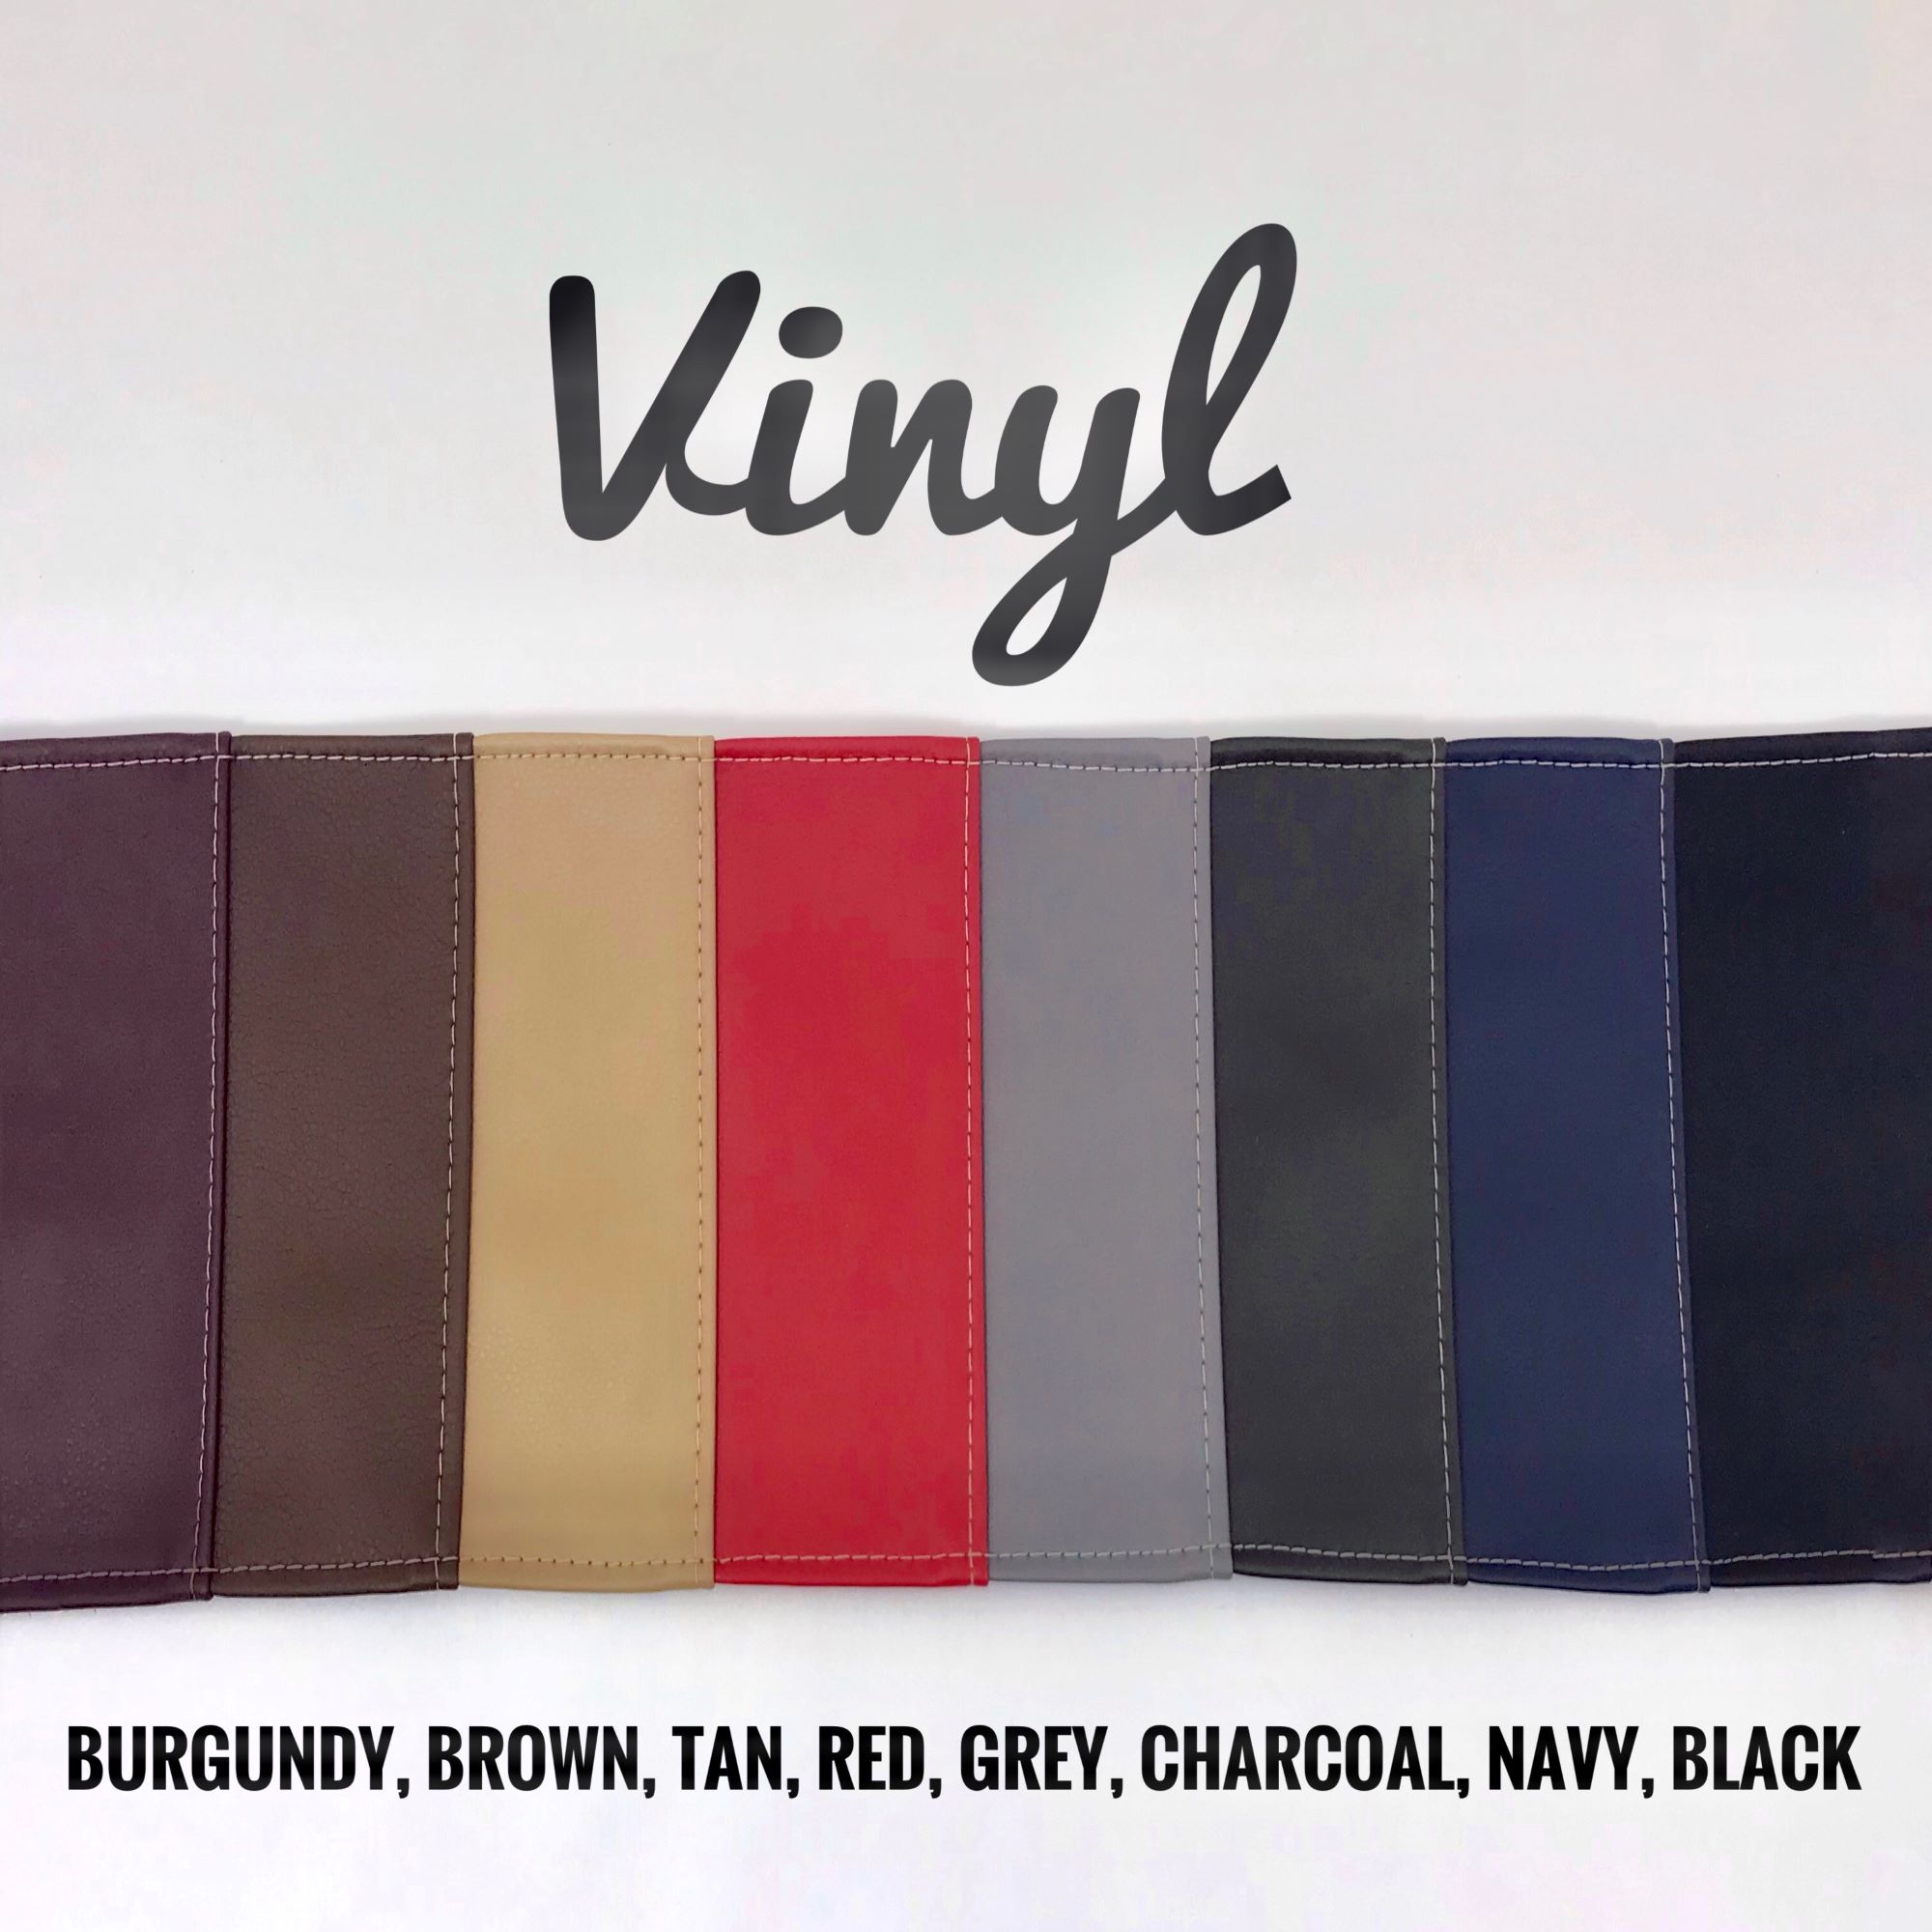 Bean bag chair vinyl fabric samples